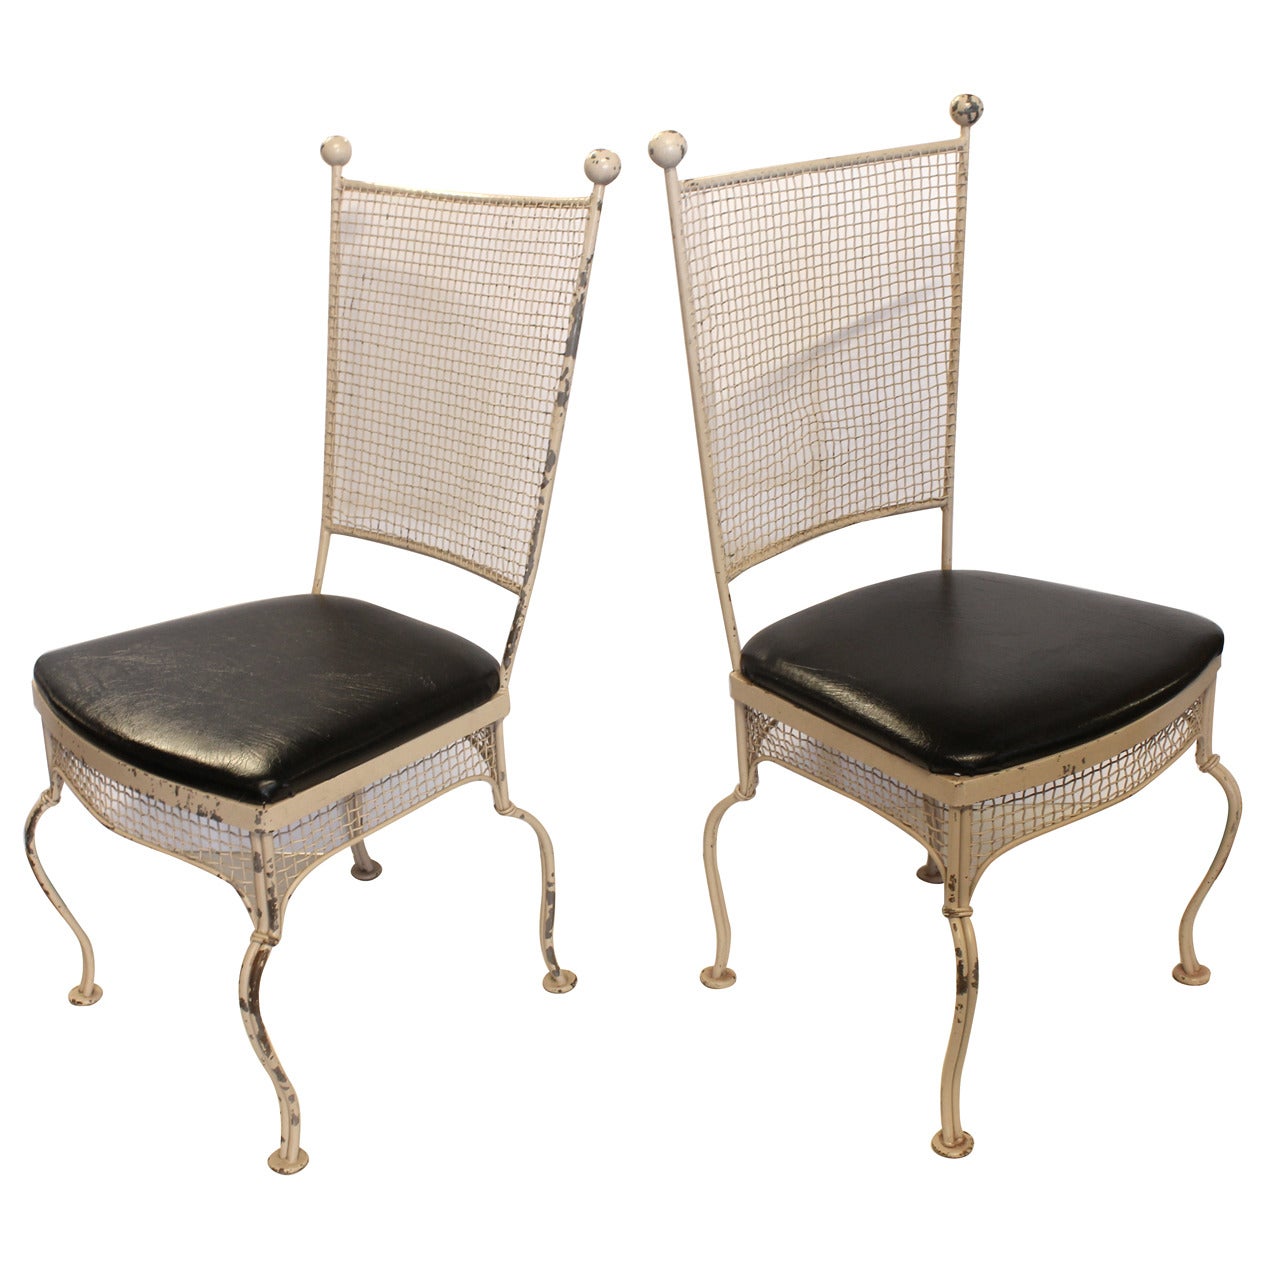 Stylish Mid-Century Garden Chairs by Woodard